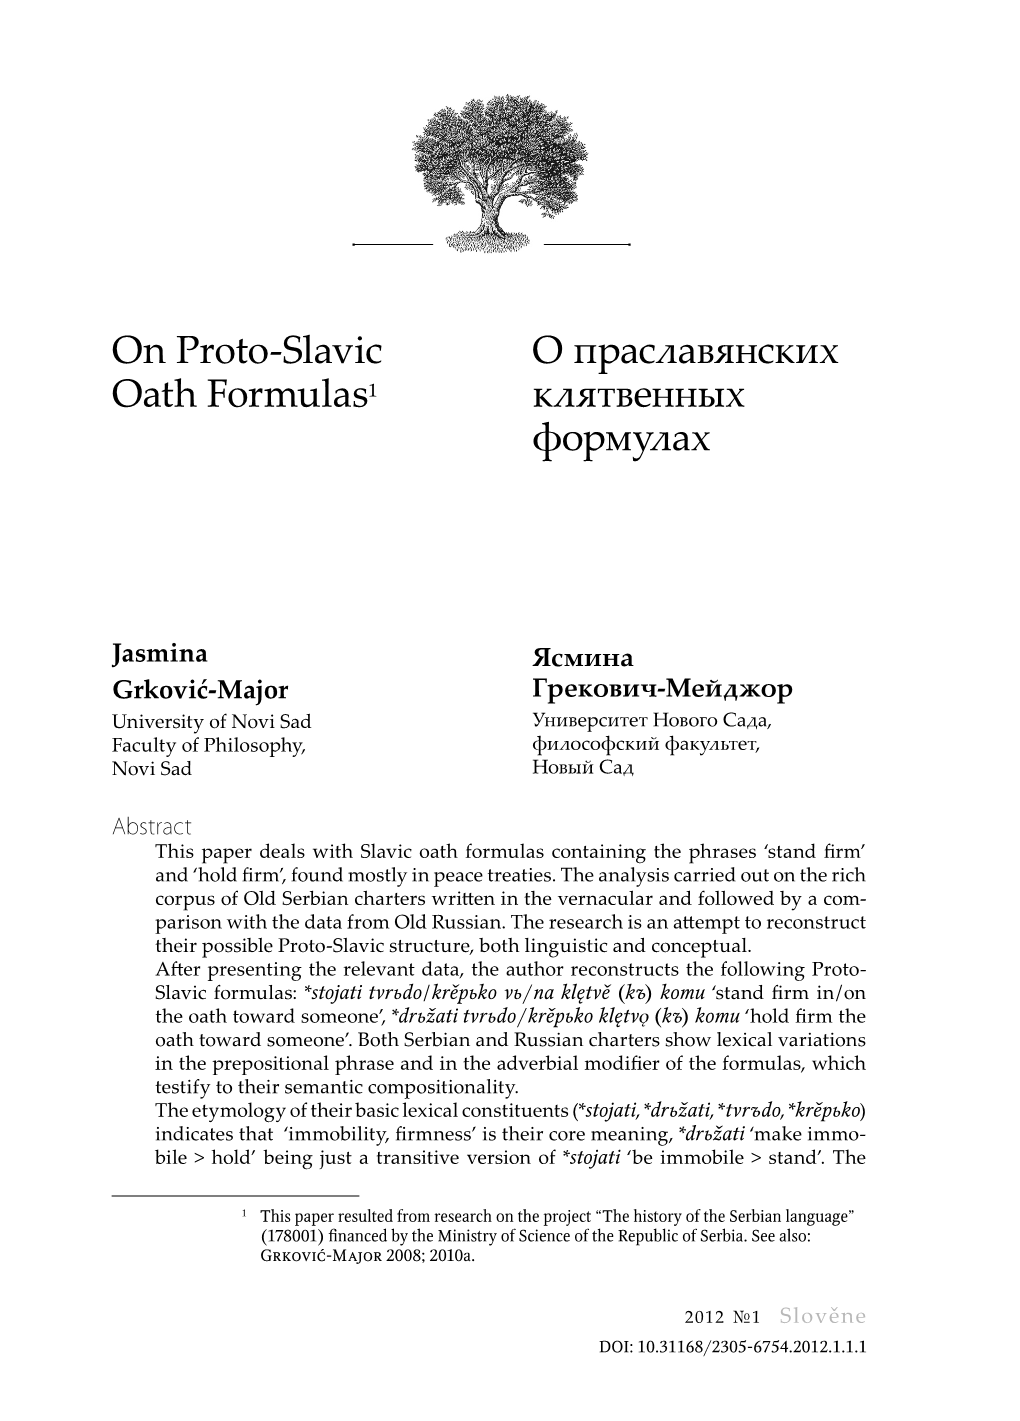 Slověne. Vol. 1. No. 1. on Proto-Slavic Oath Formulas